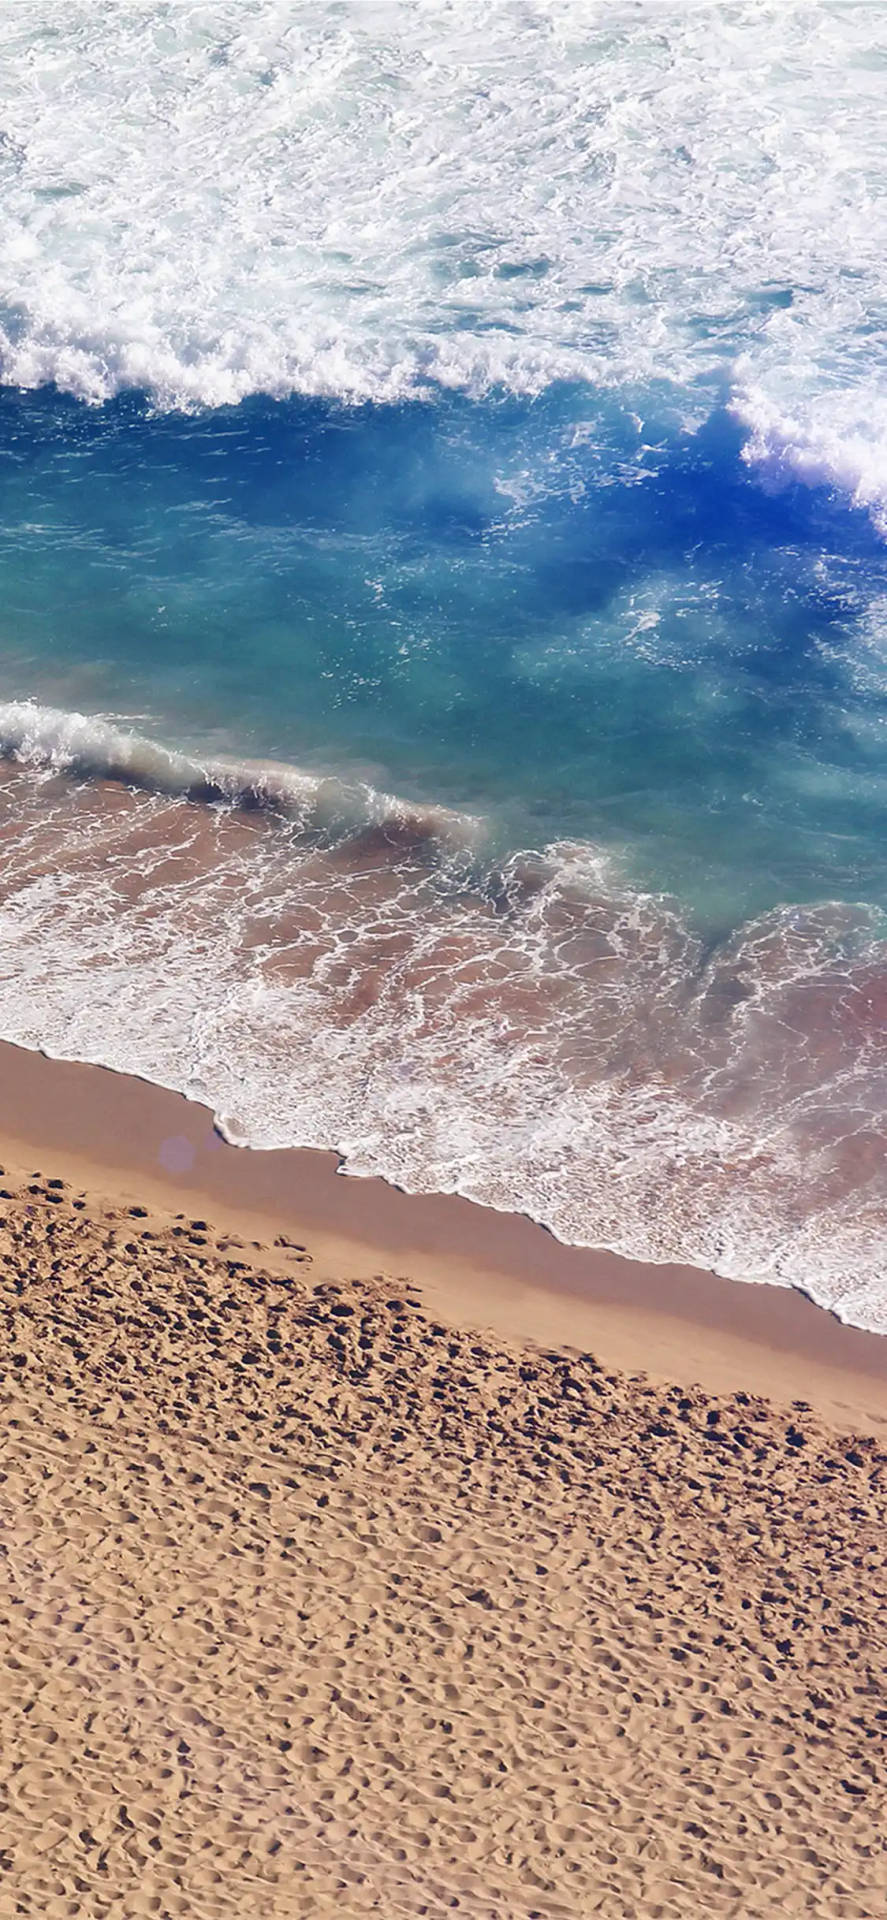 Iphone X Beach White Sands Background